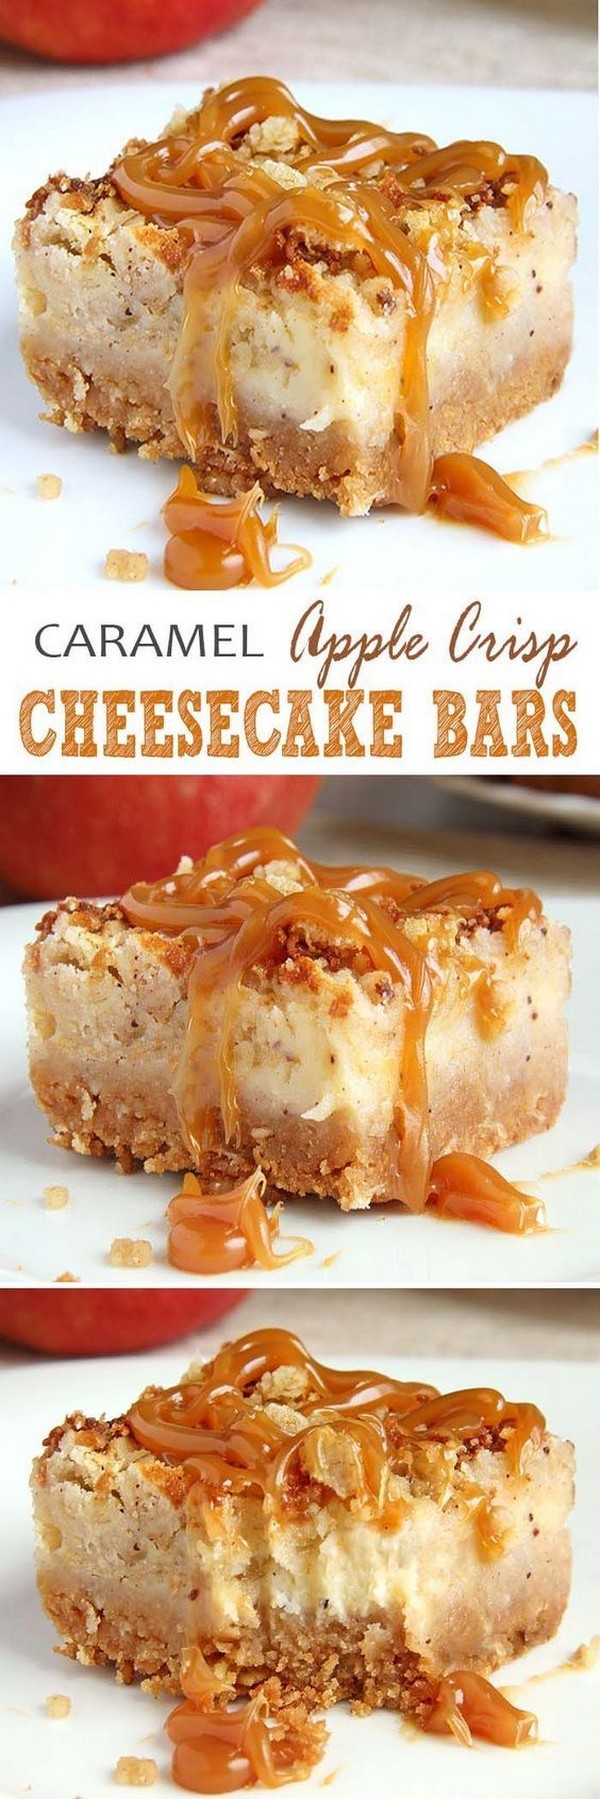 Caramel Apple Crisp Cheesecake Bars